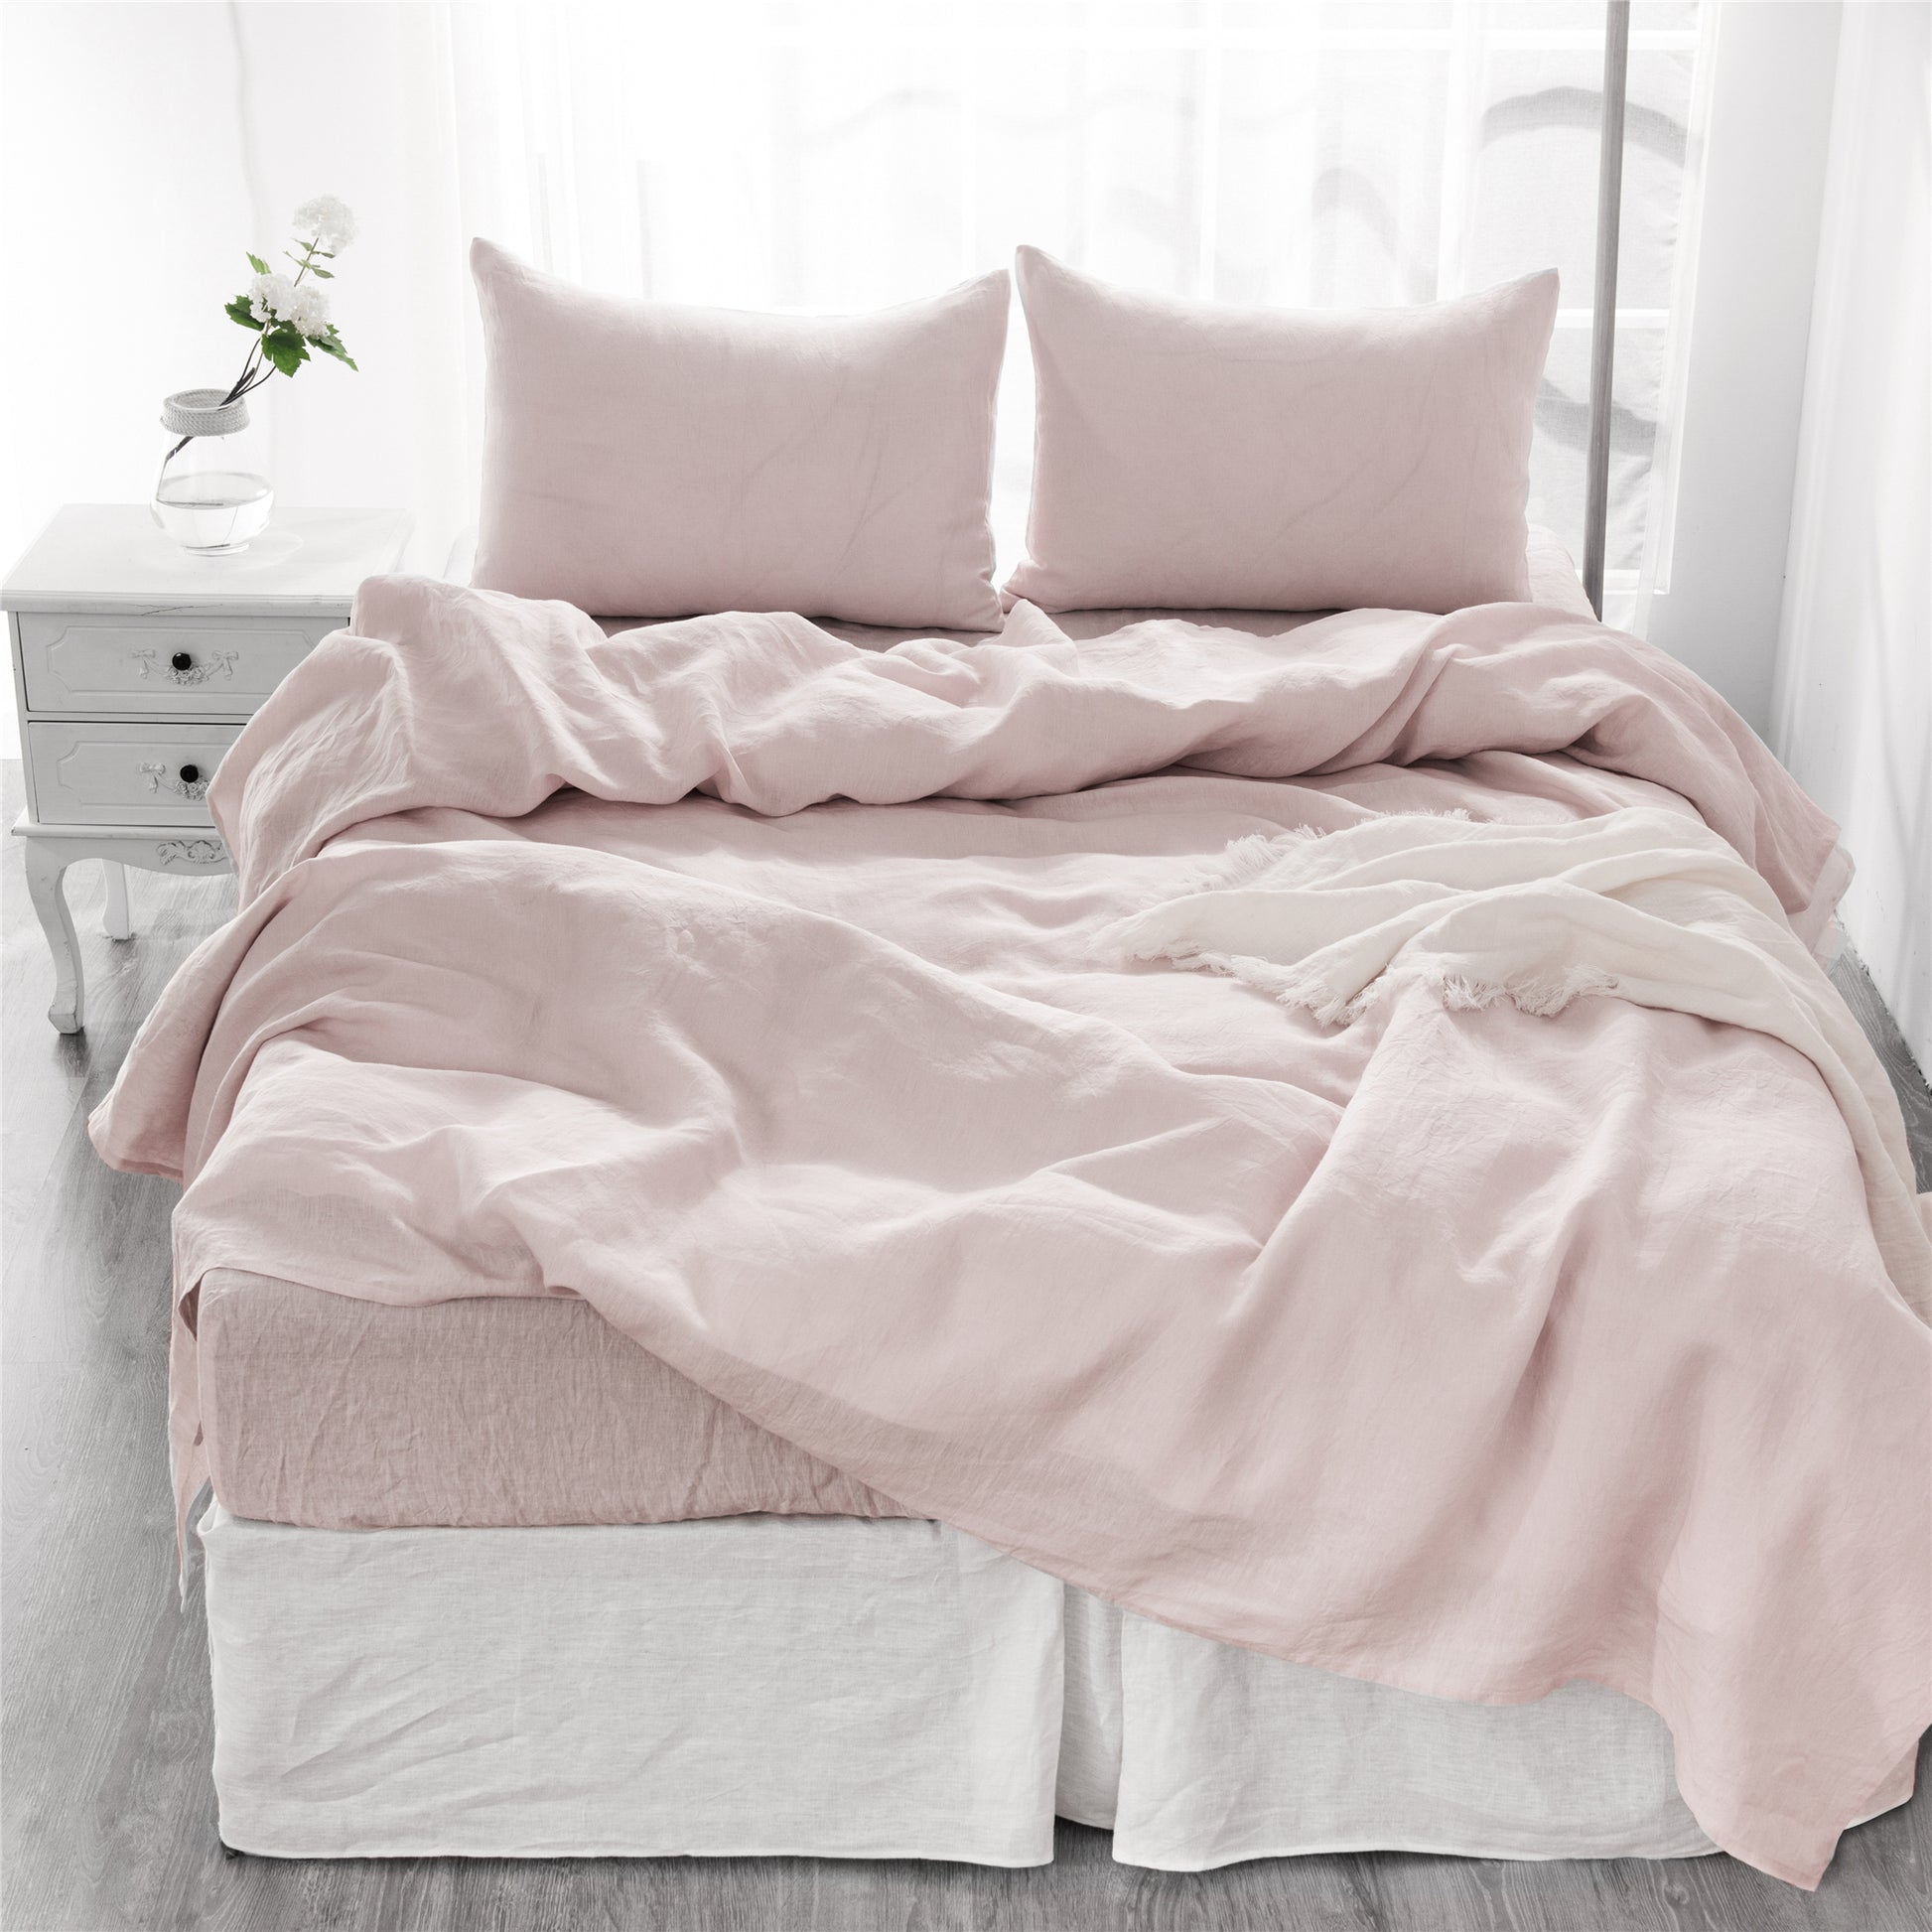 Linen Pillow Sham for linen bedding in USA